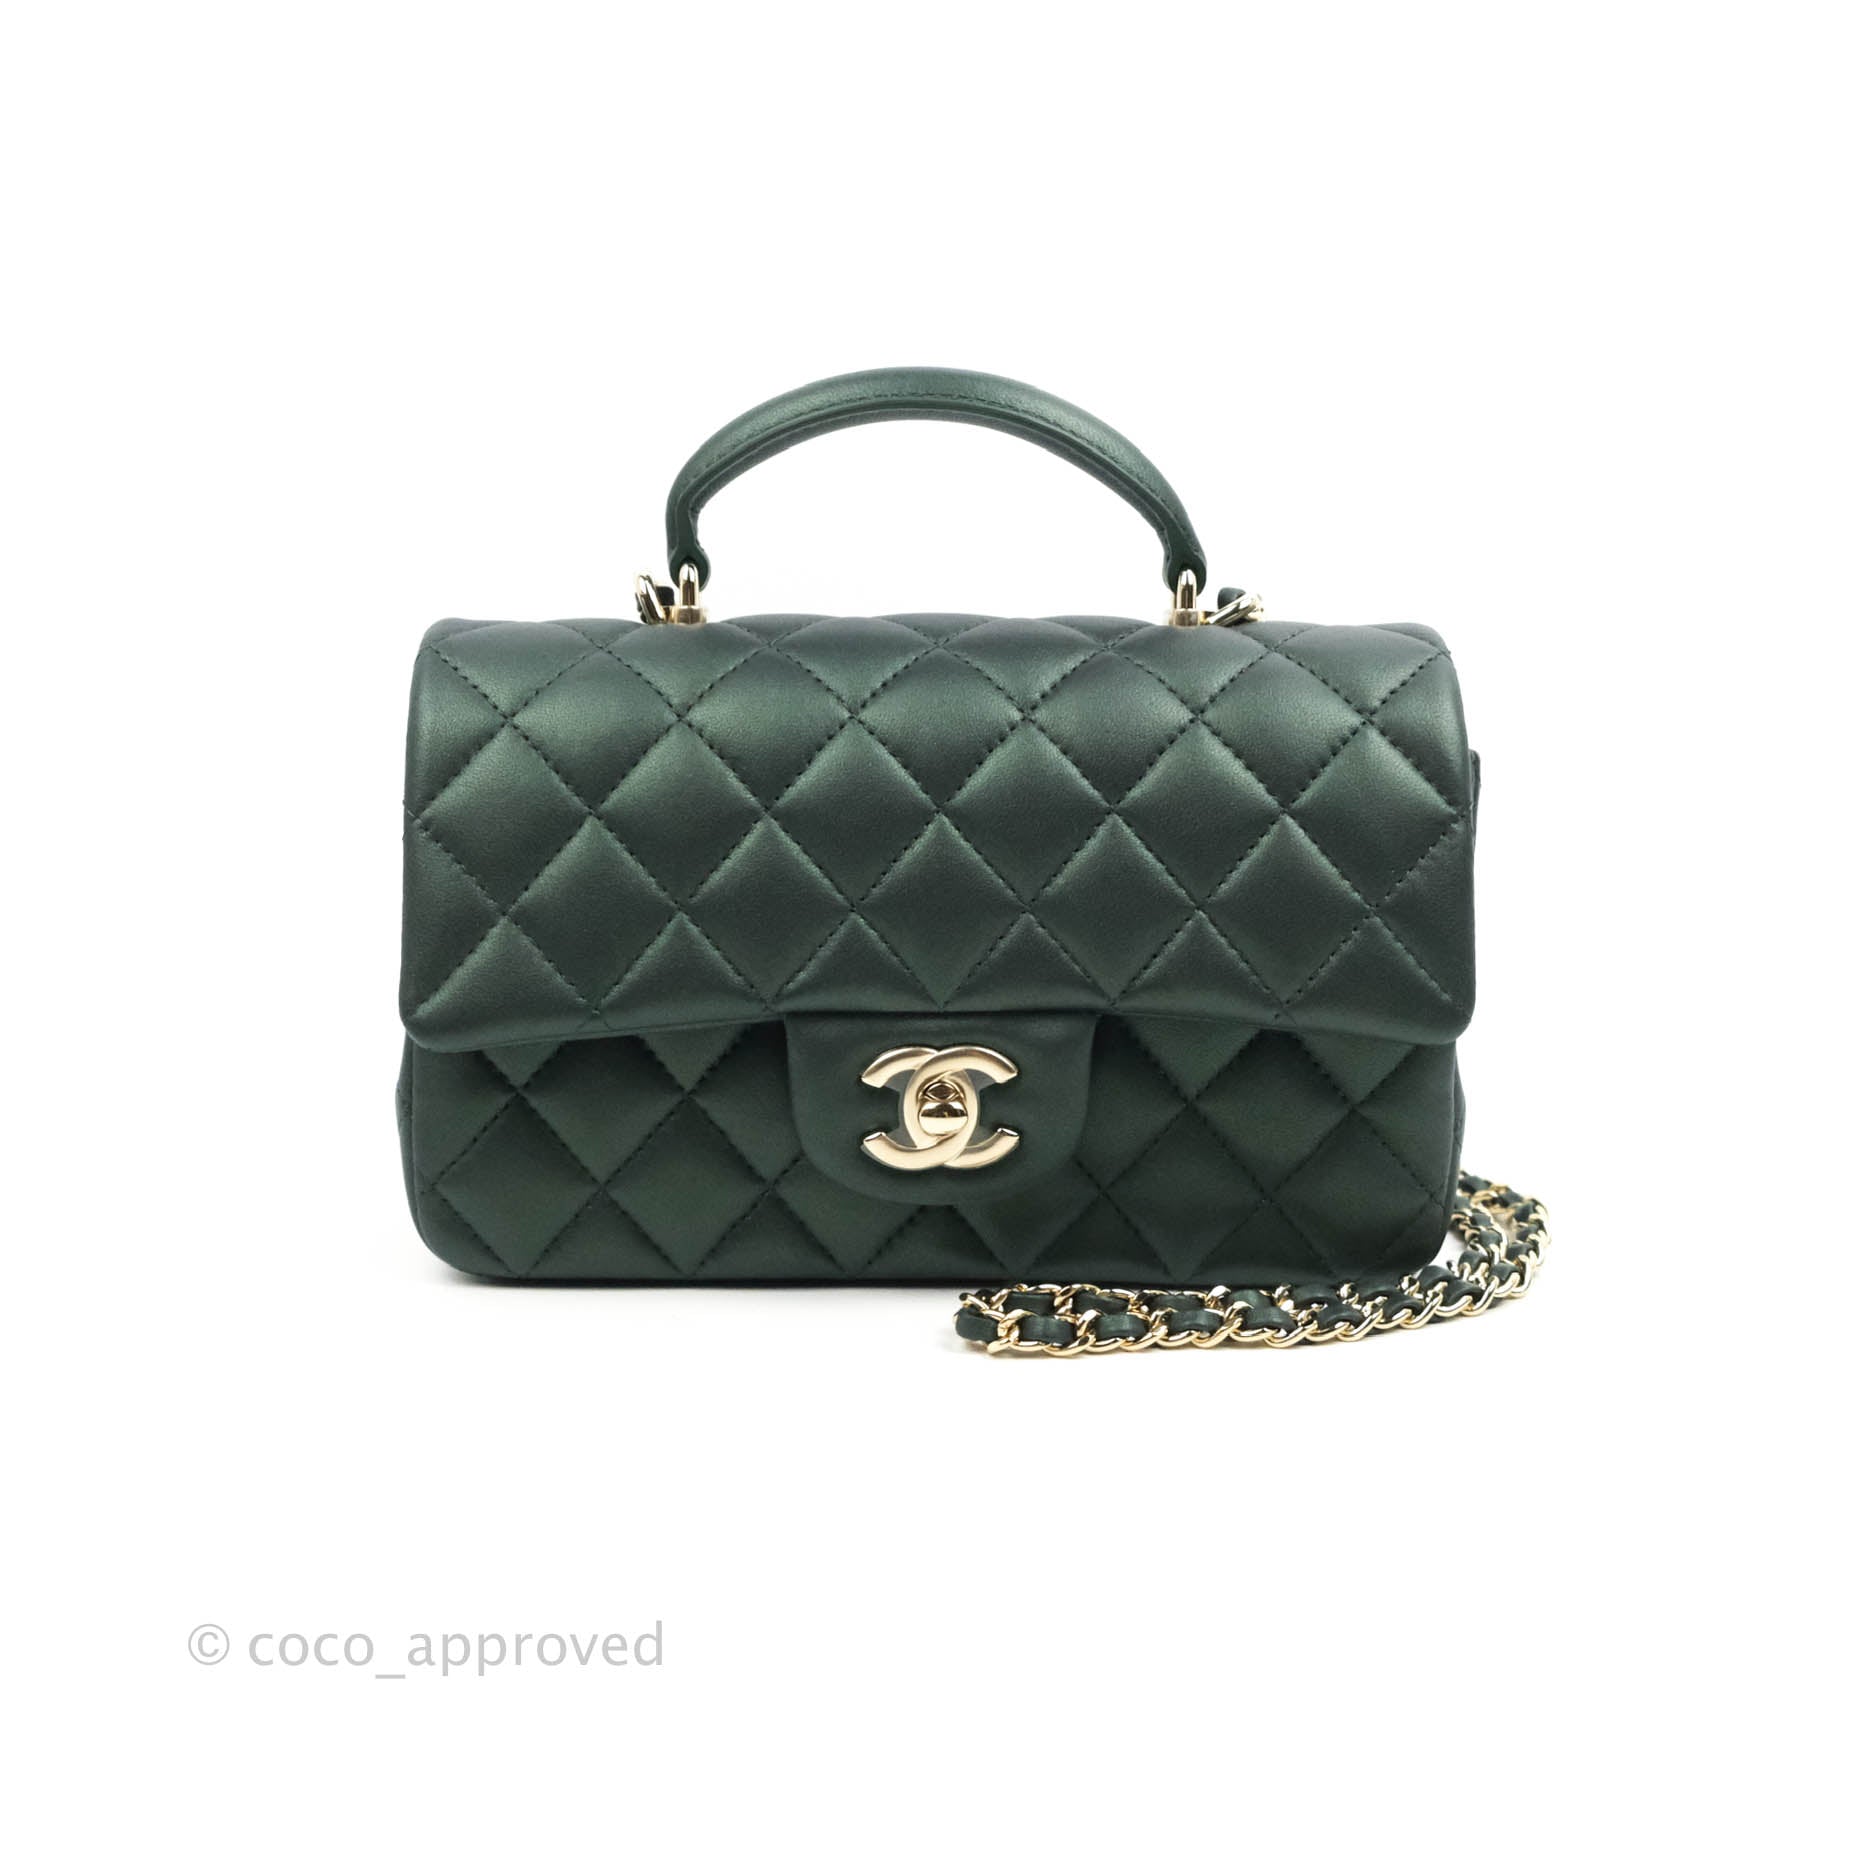 Handbags Chanel Classic Mini Flap Bag with Top Handle Pink/Green